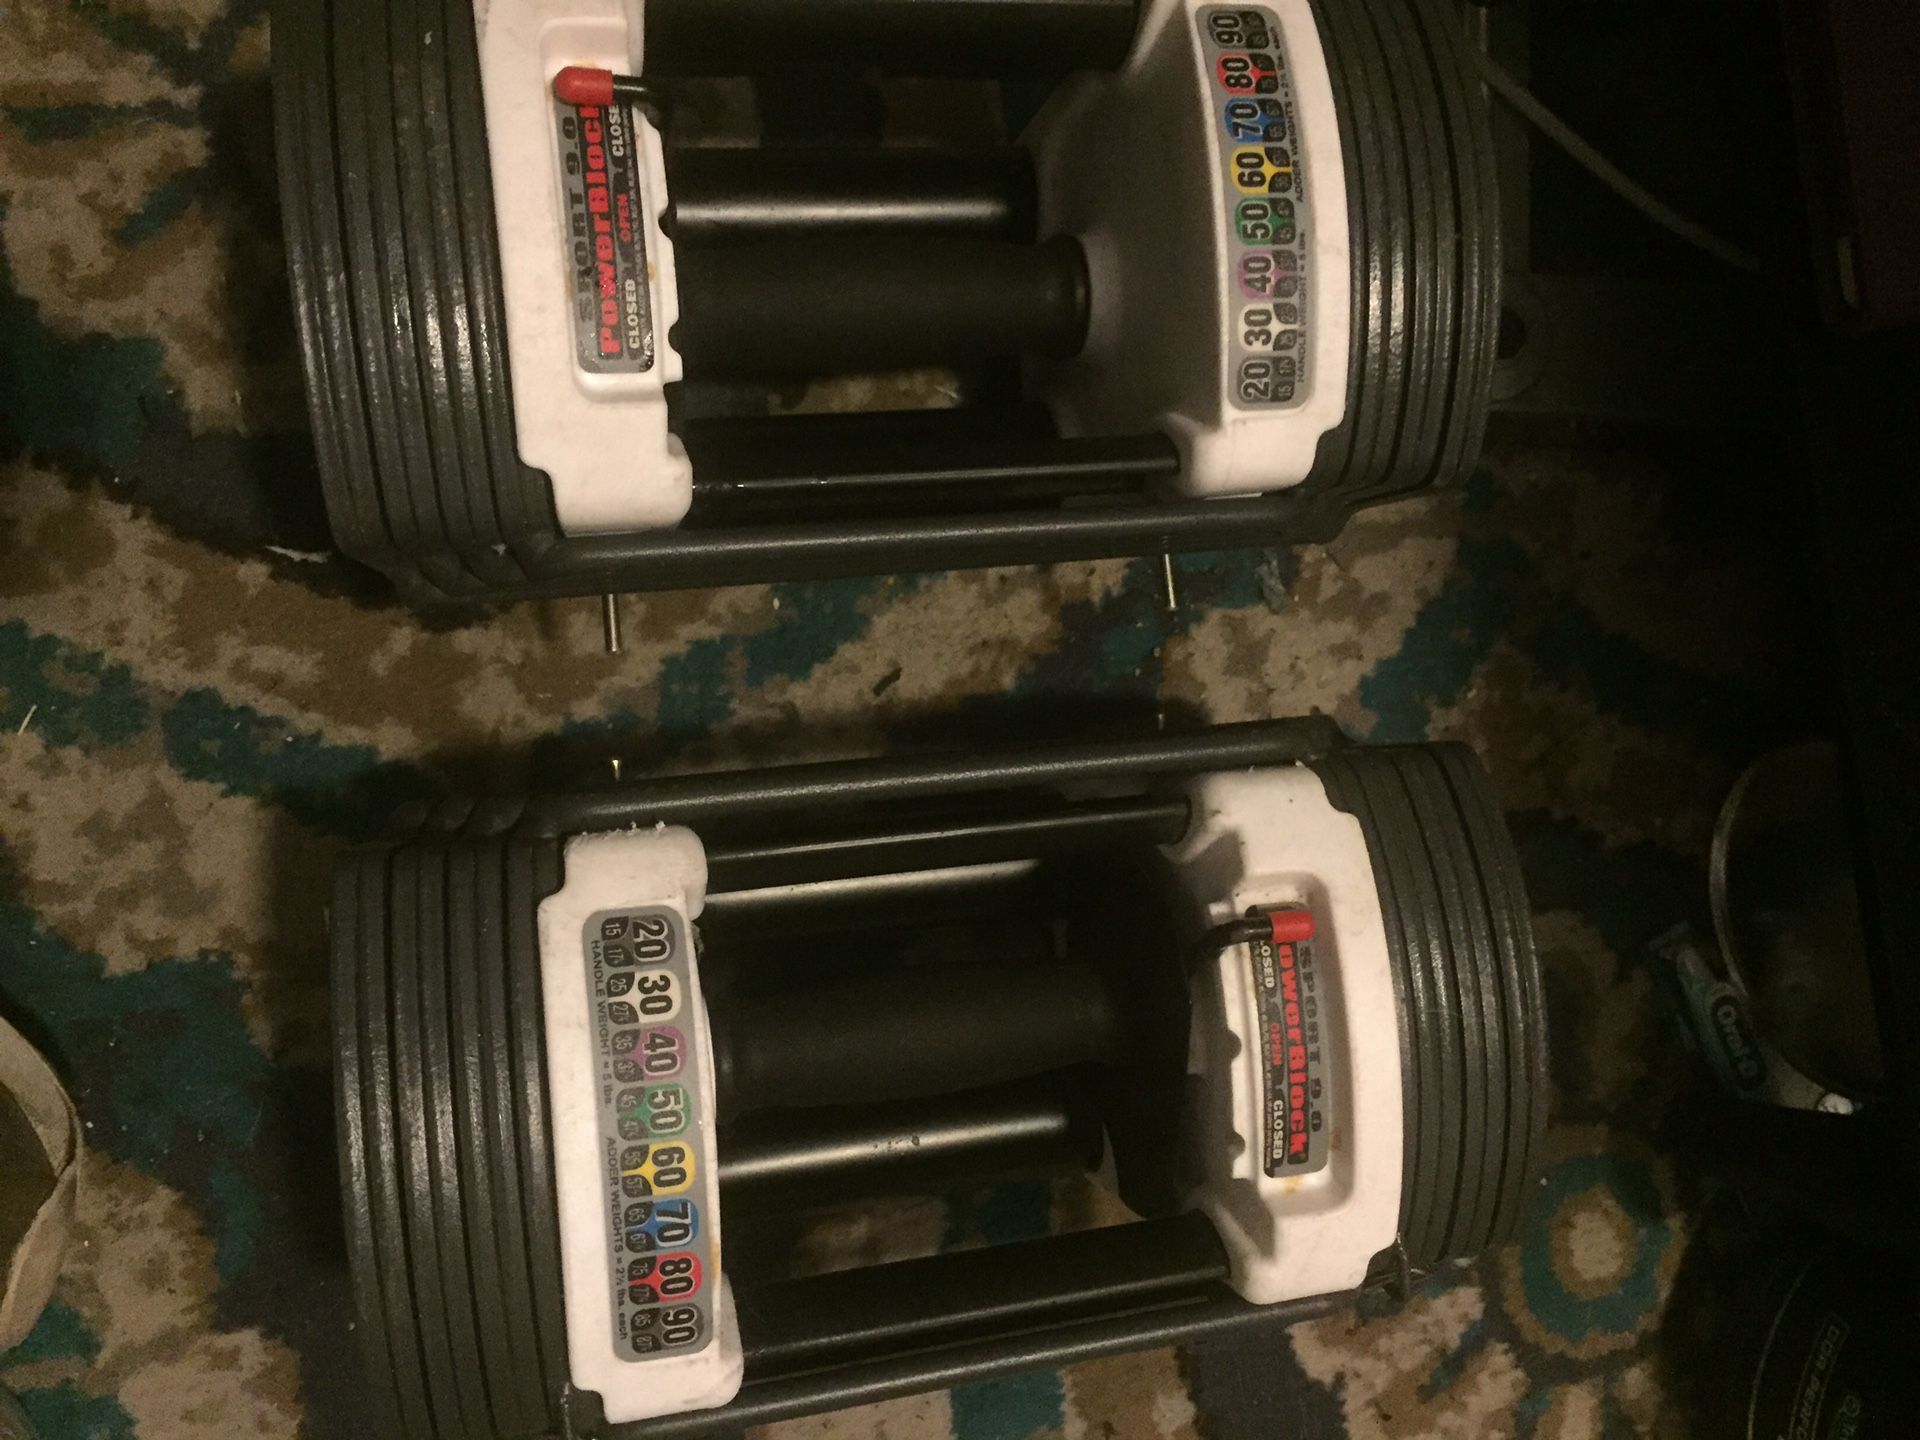 PowerBlock Sport 90 Dumbells set (5-50 lbs each, expandable to 90 lbs each)